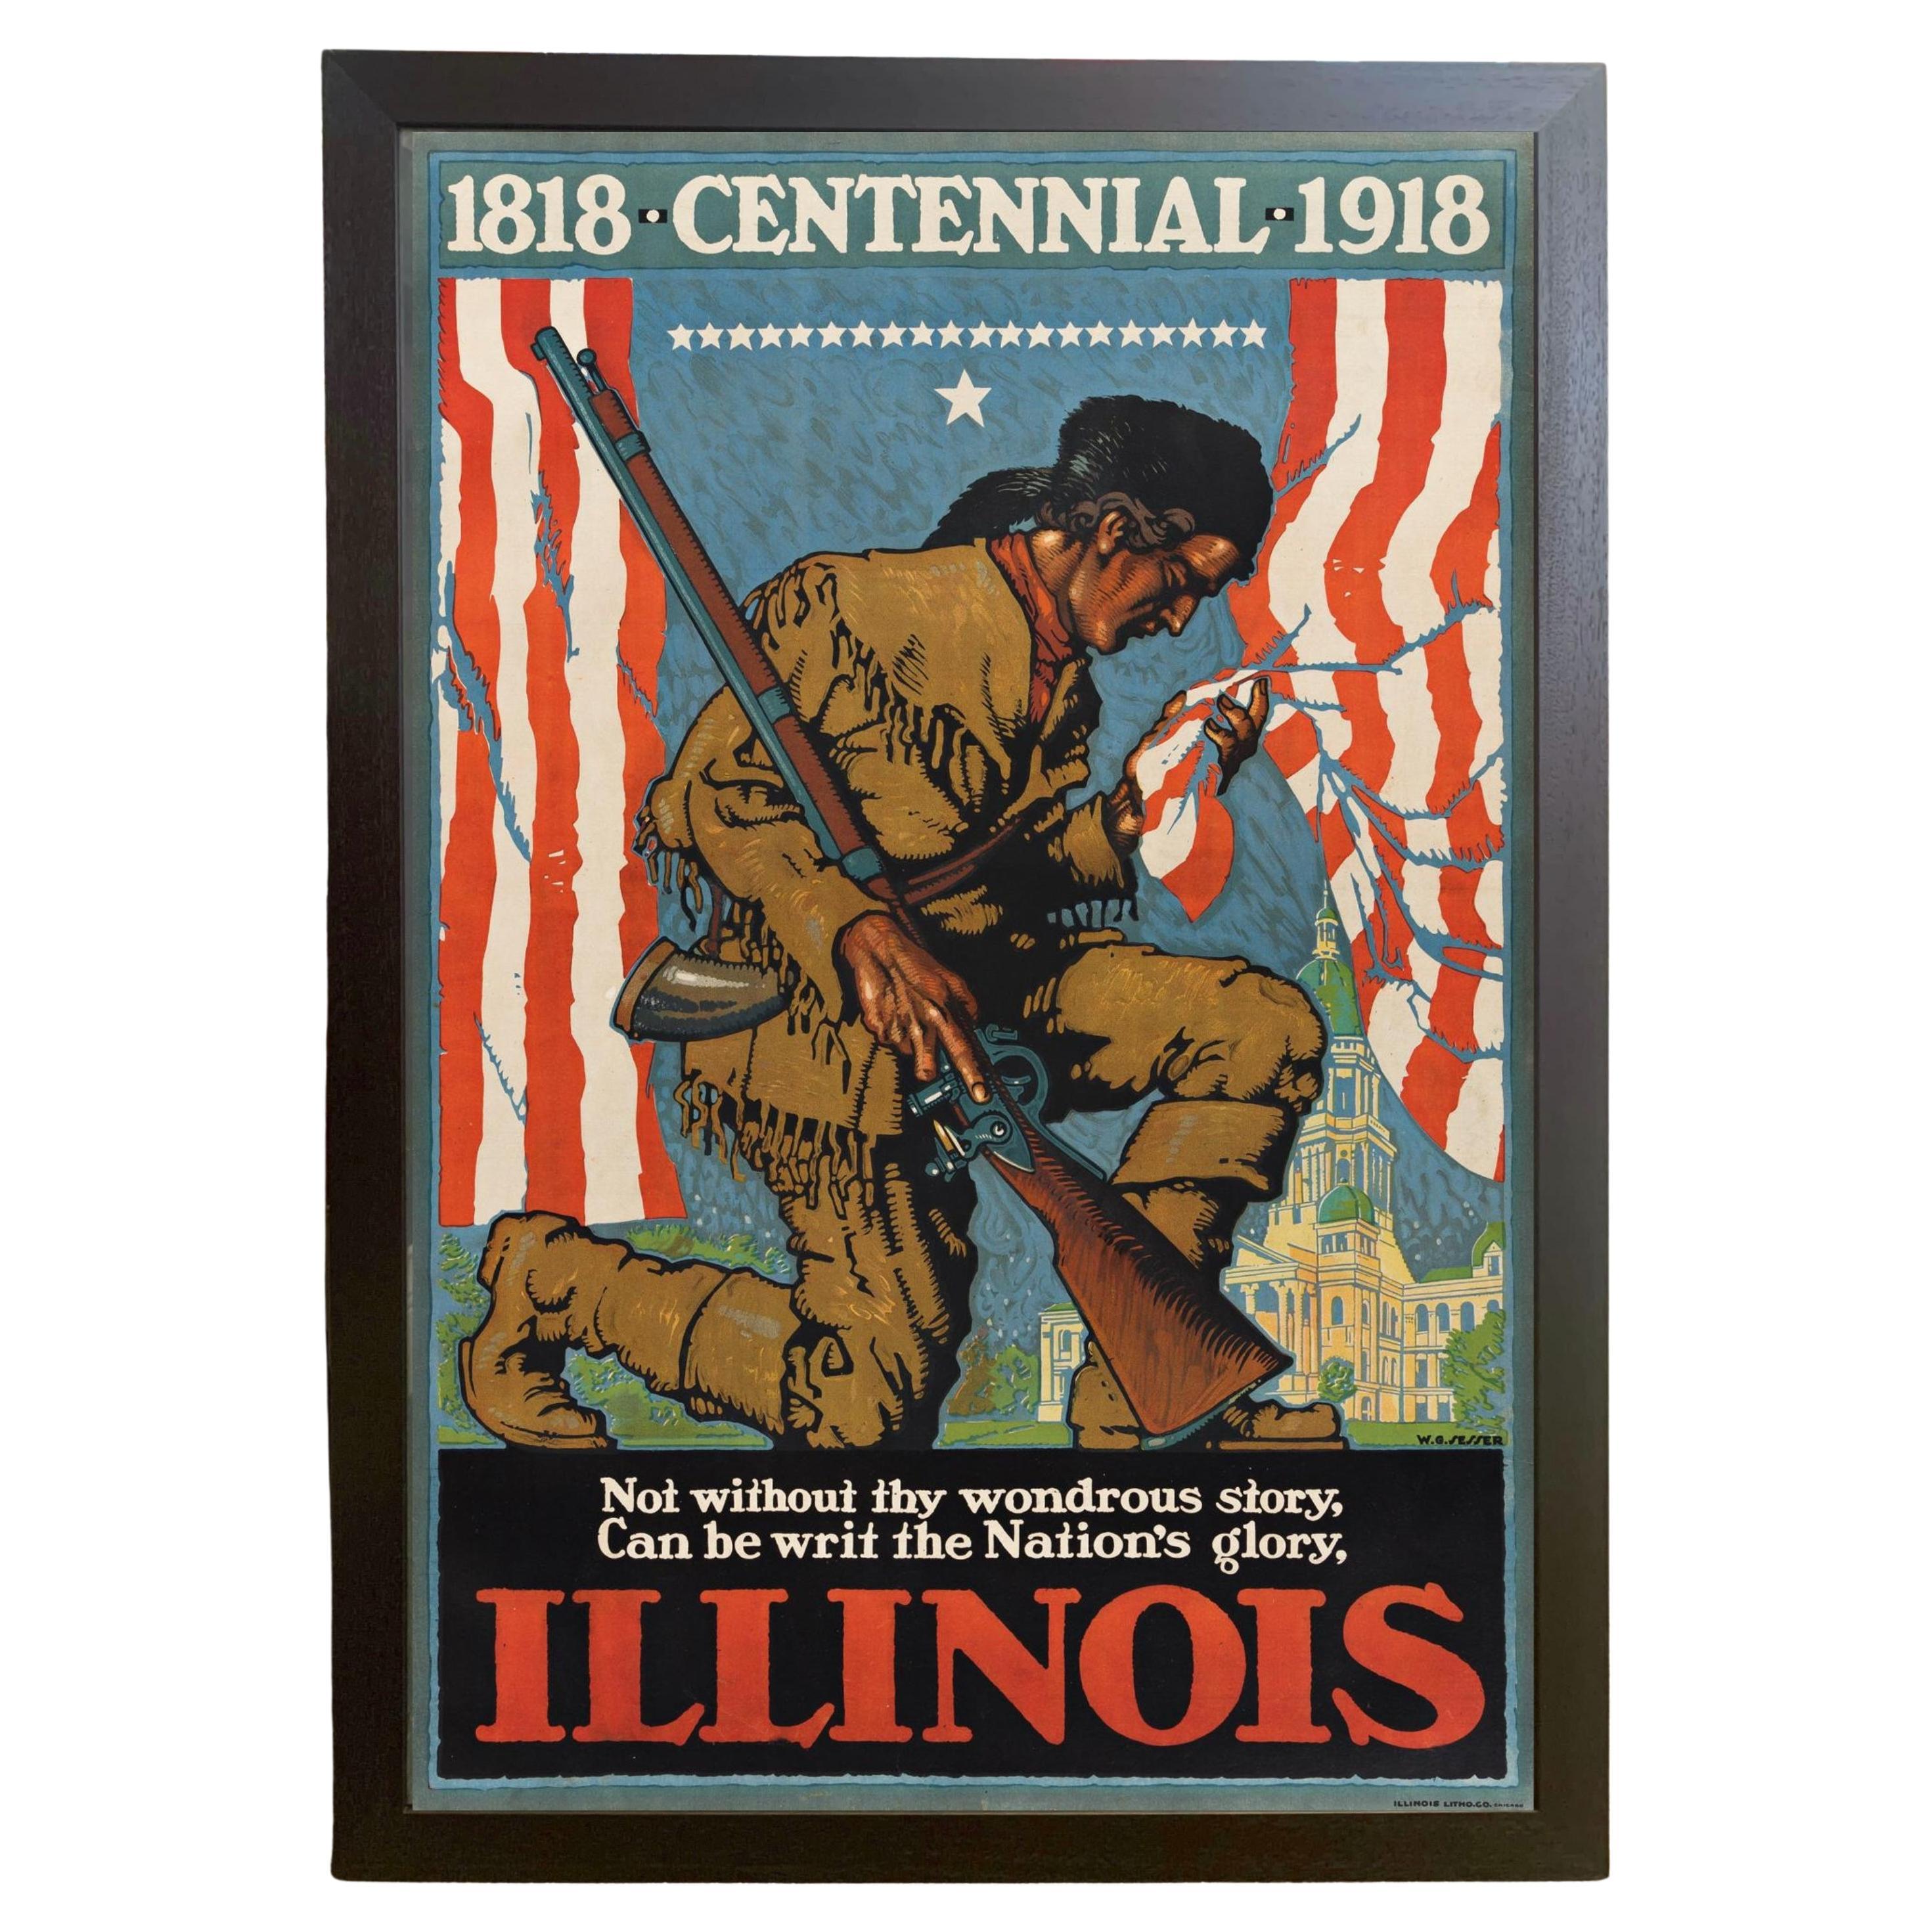 "Illinois. 1818 Centennial 1918". Affiche vintage de Willy Sesser, 1918